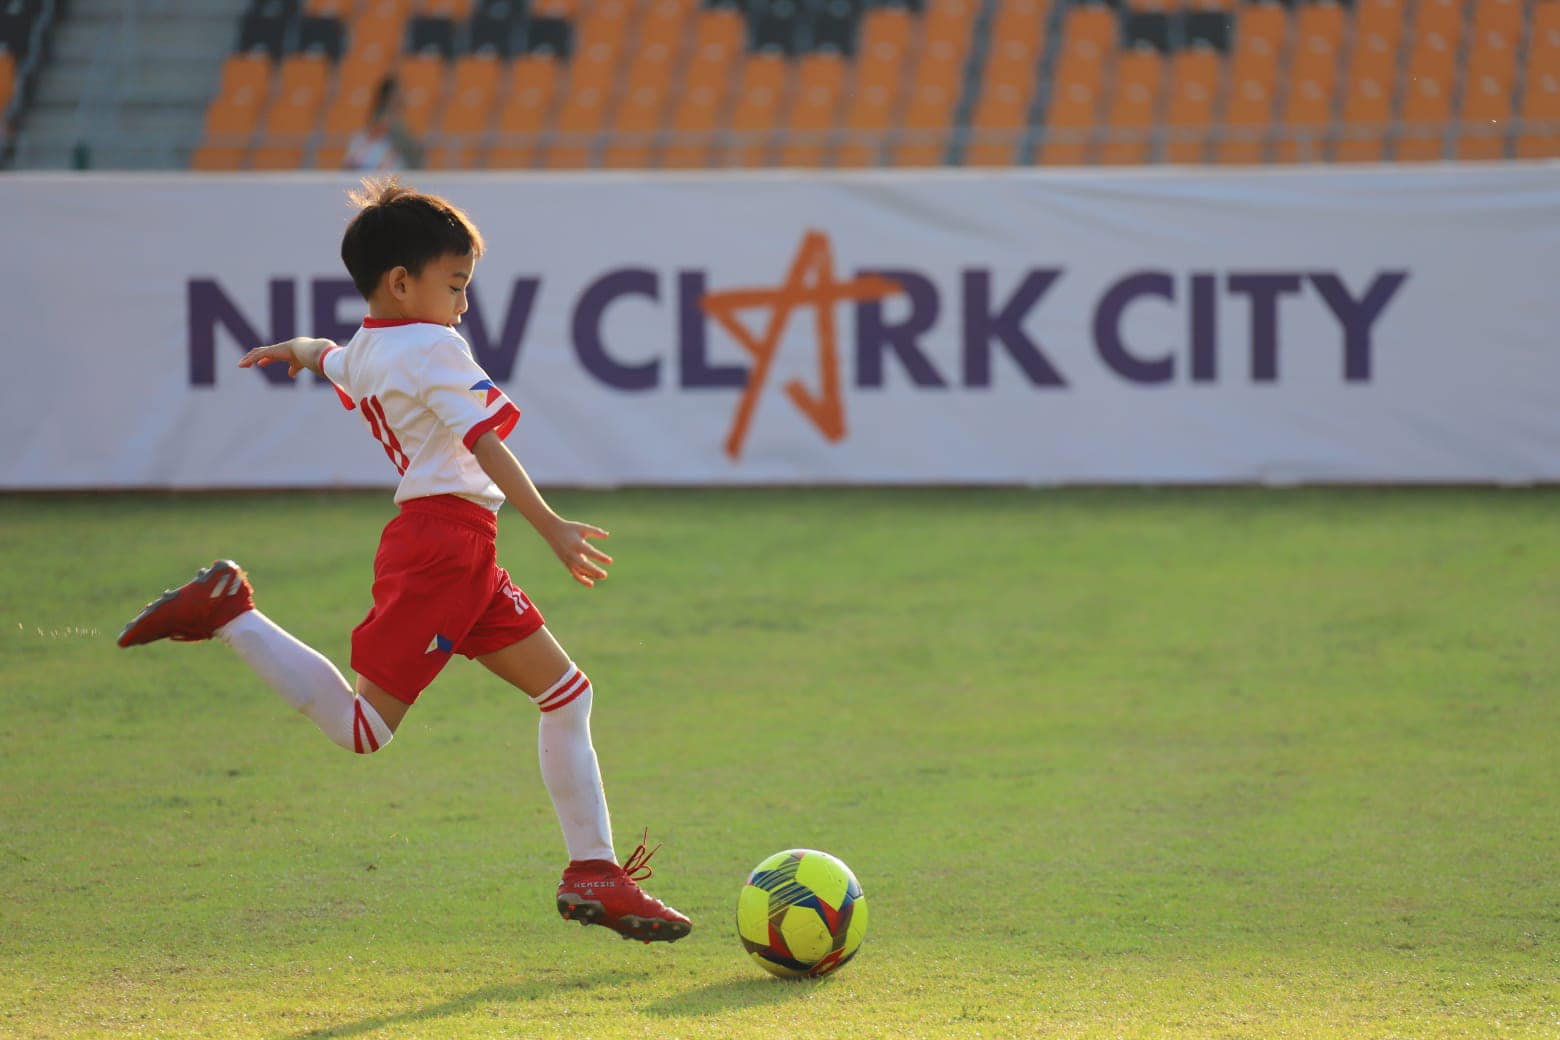 a child kicking a football ball